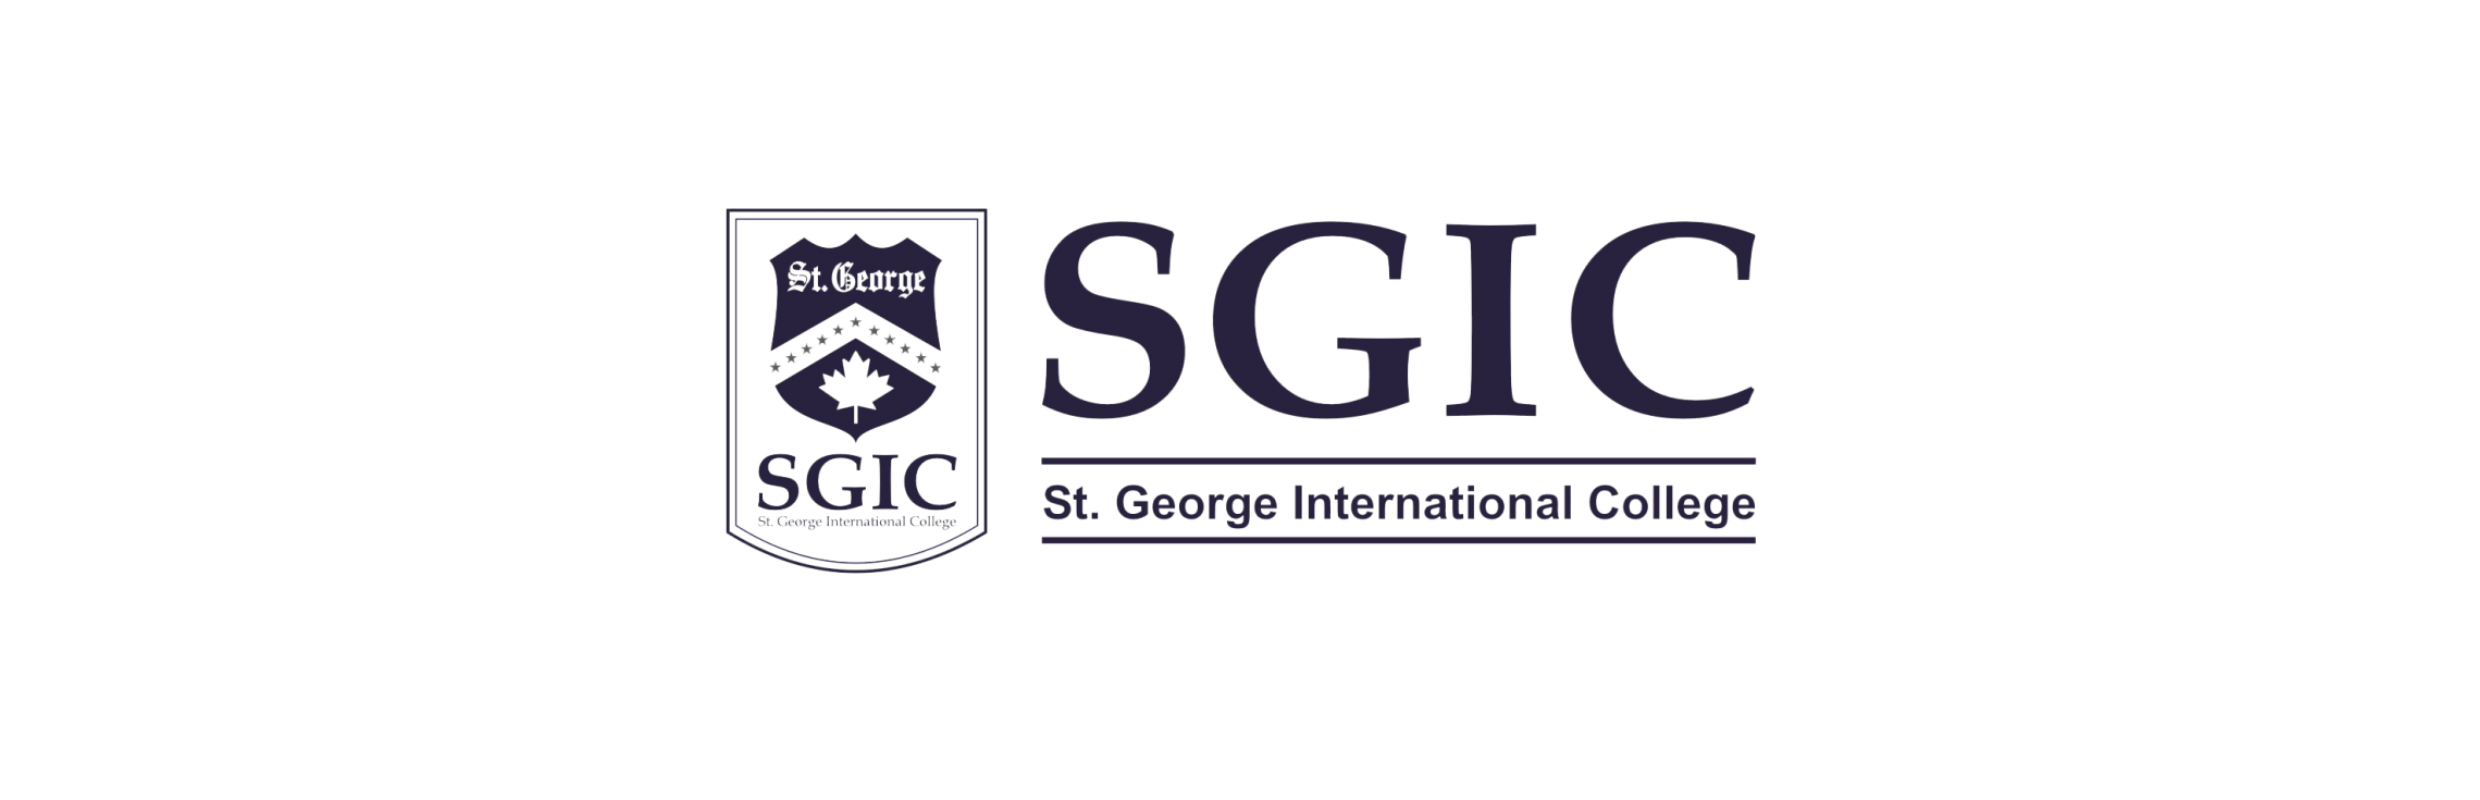 SGIC St. George International College